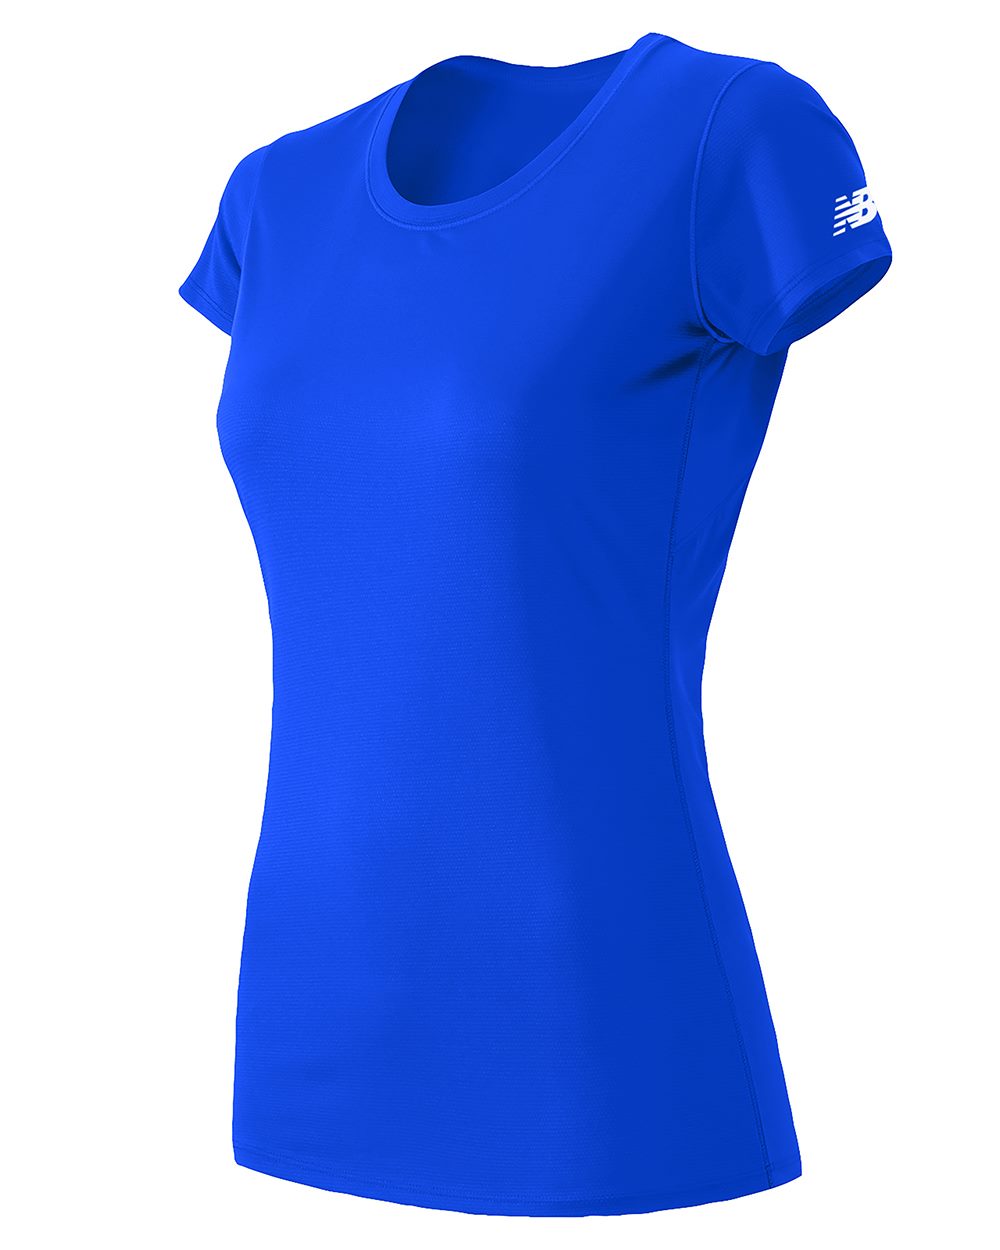 New Balance Women's Performance T-Shirt #WT81036P Royal Blue